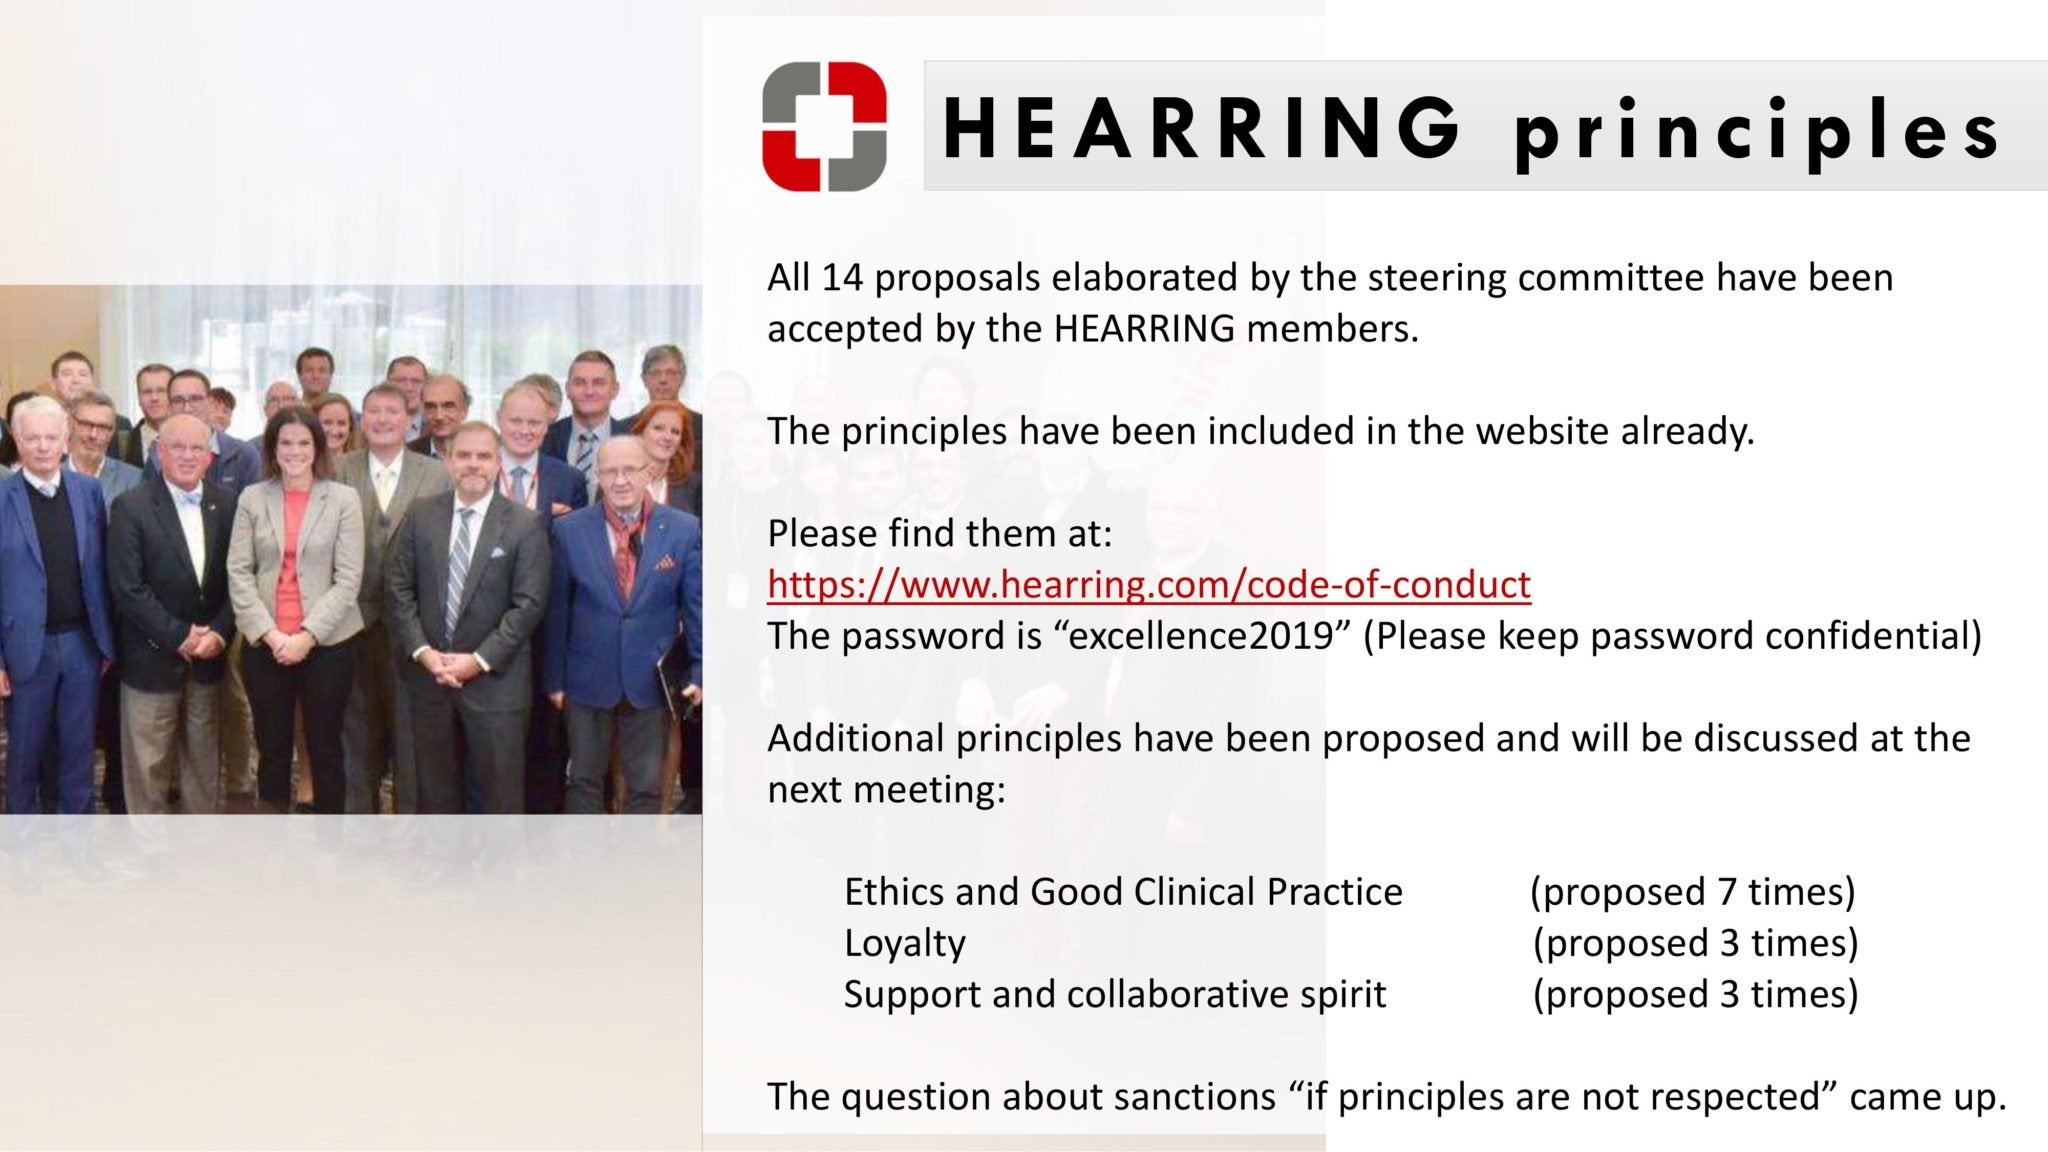 Hearring principles